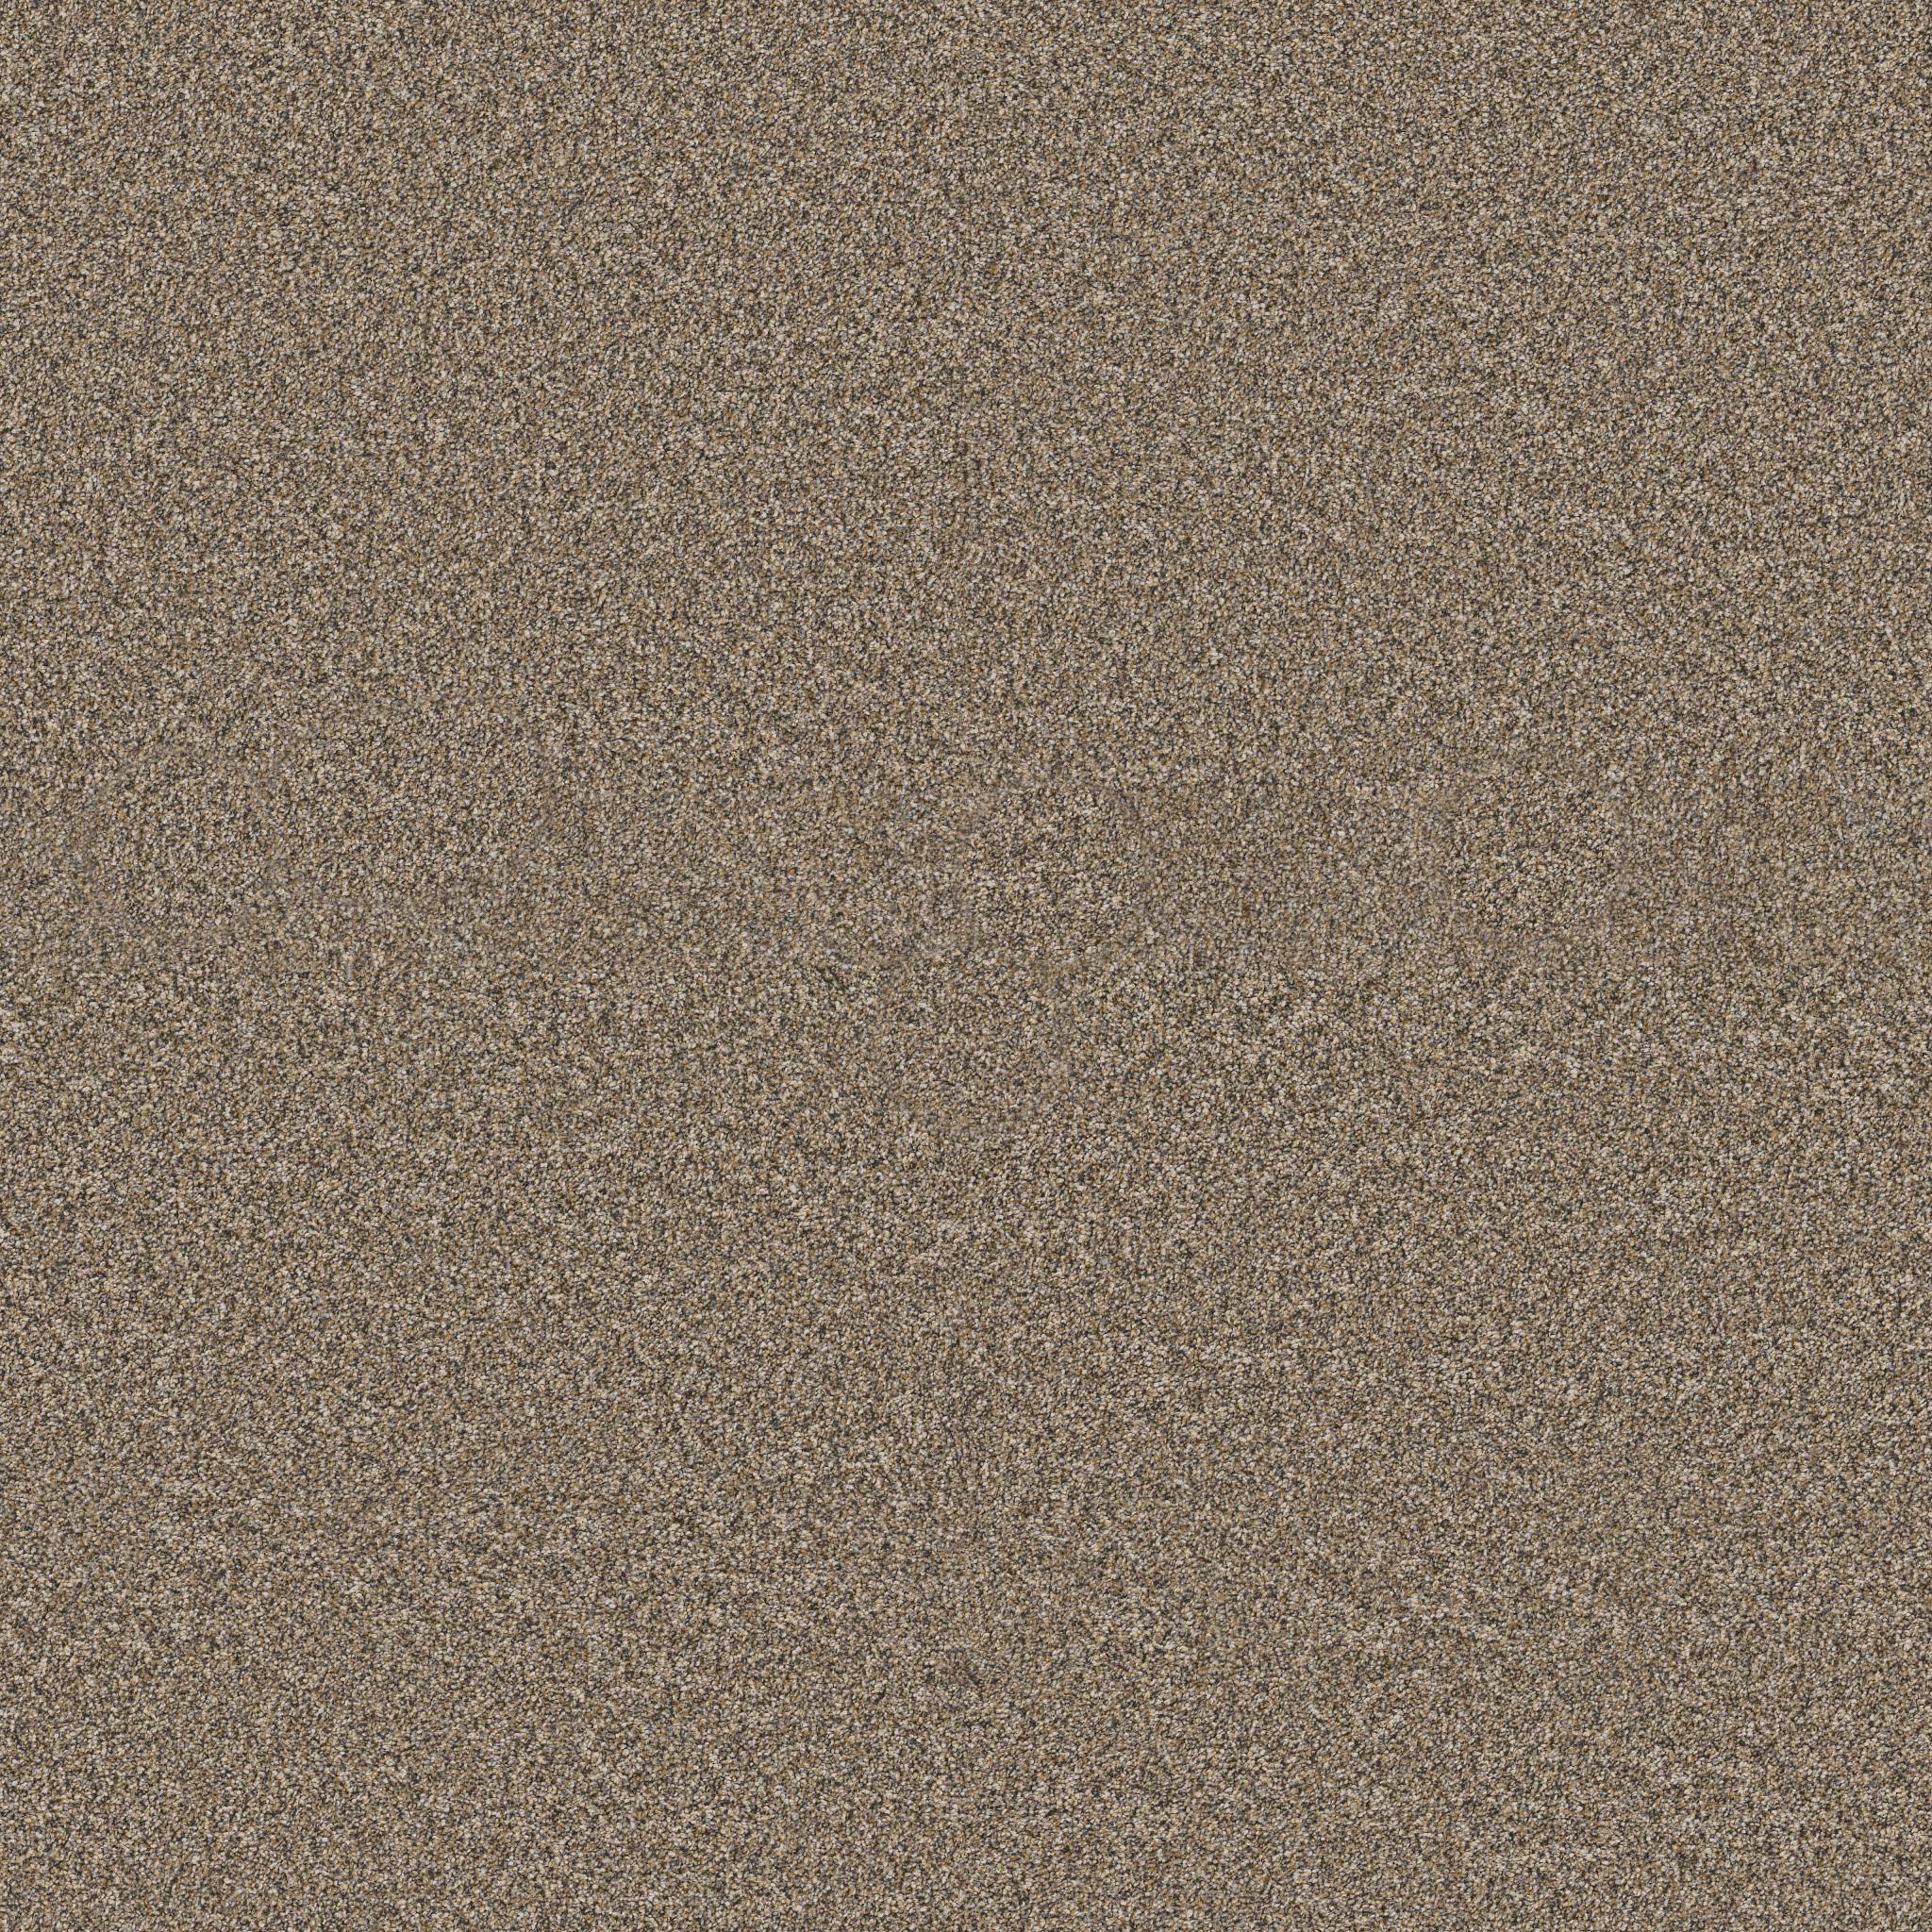 Kaleidoscope Carpet - Shimmering Zoomed Swatch Image